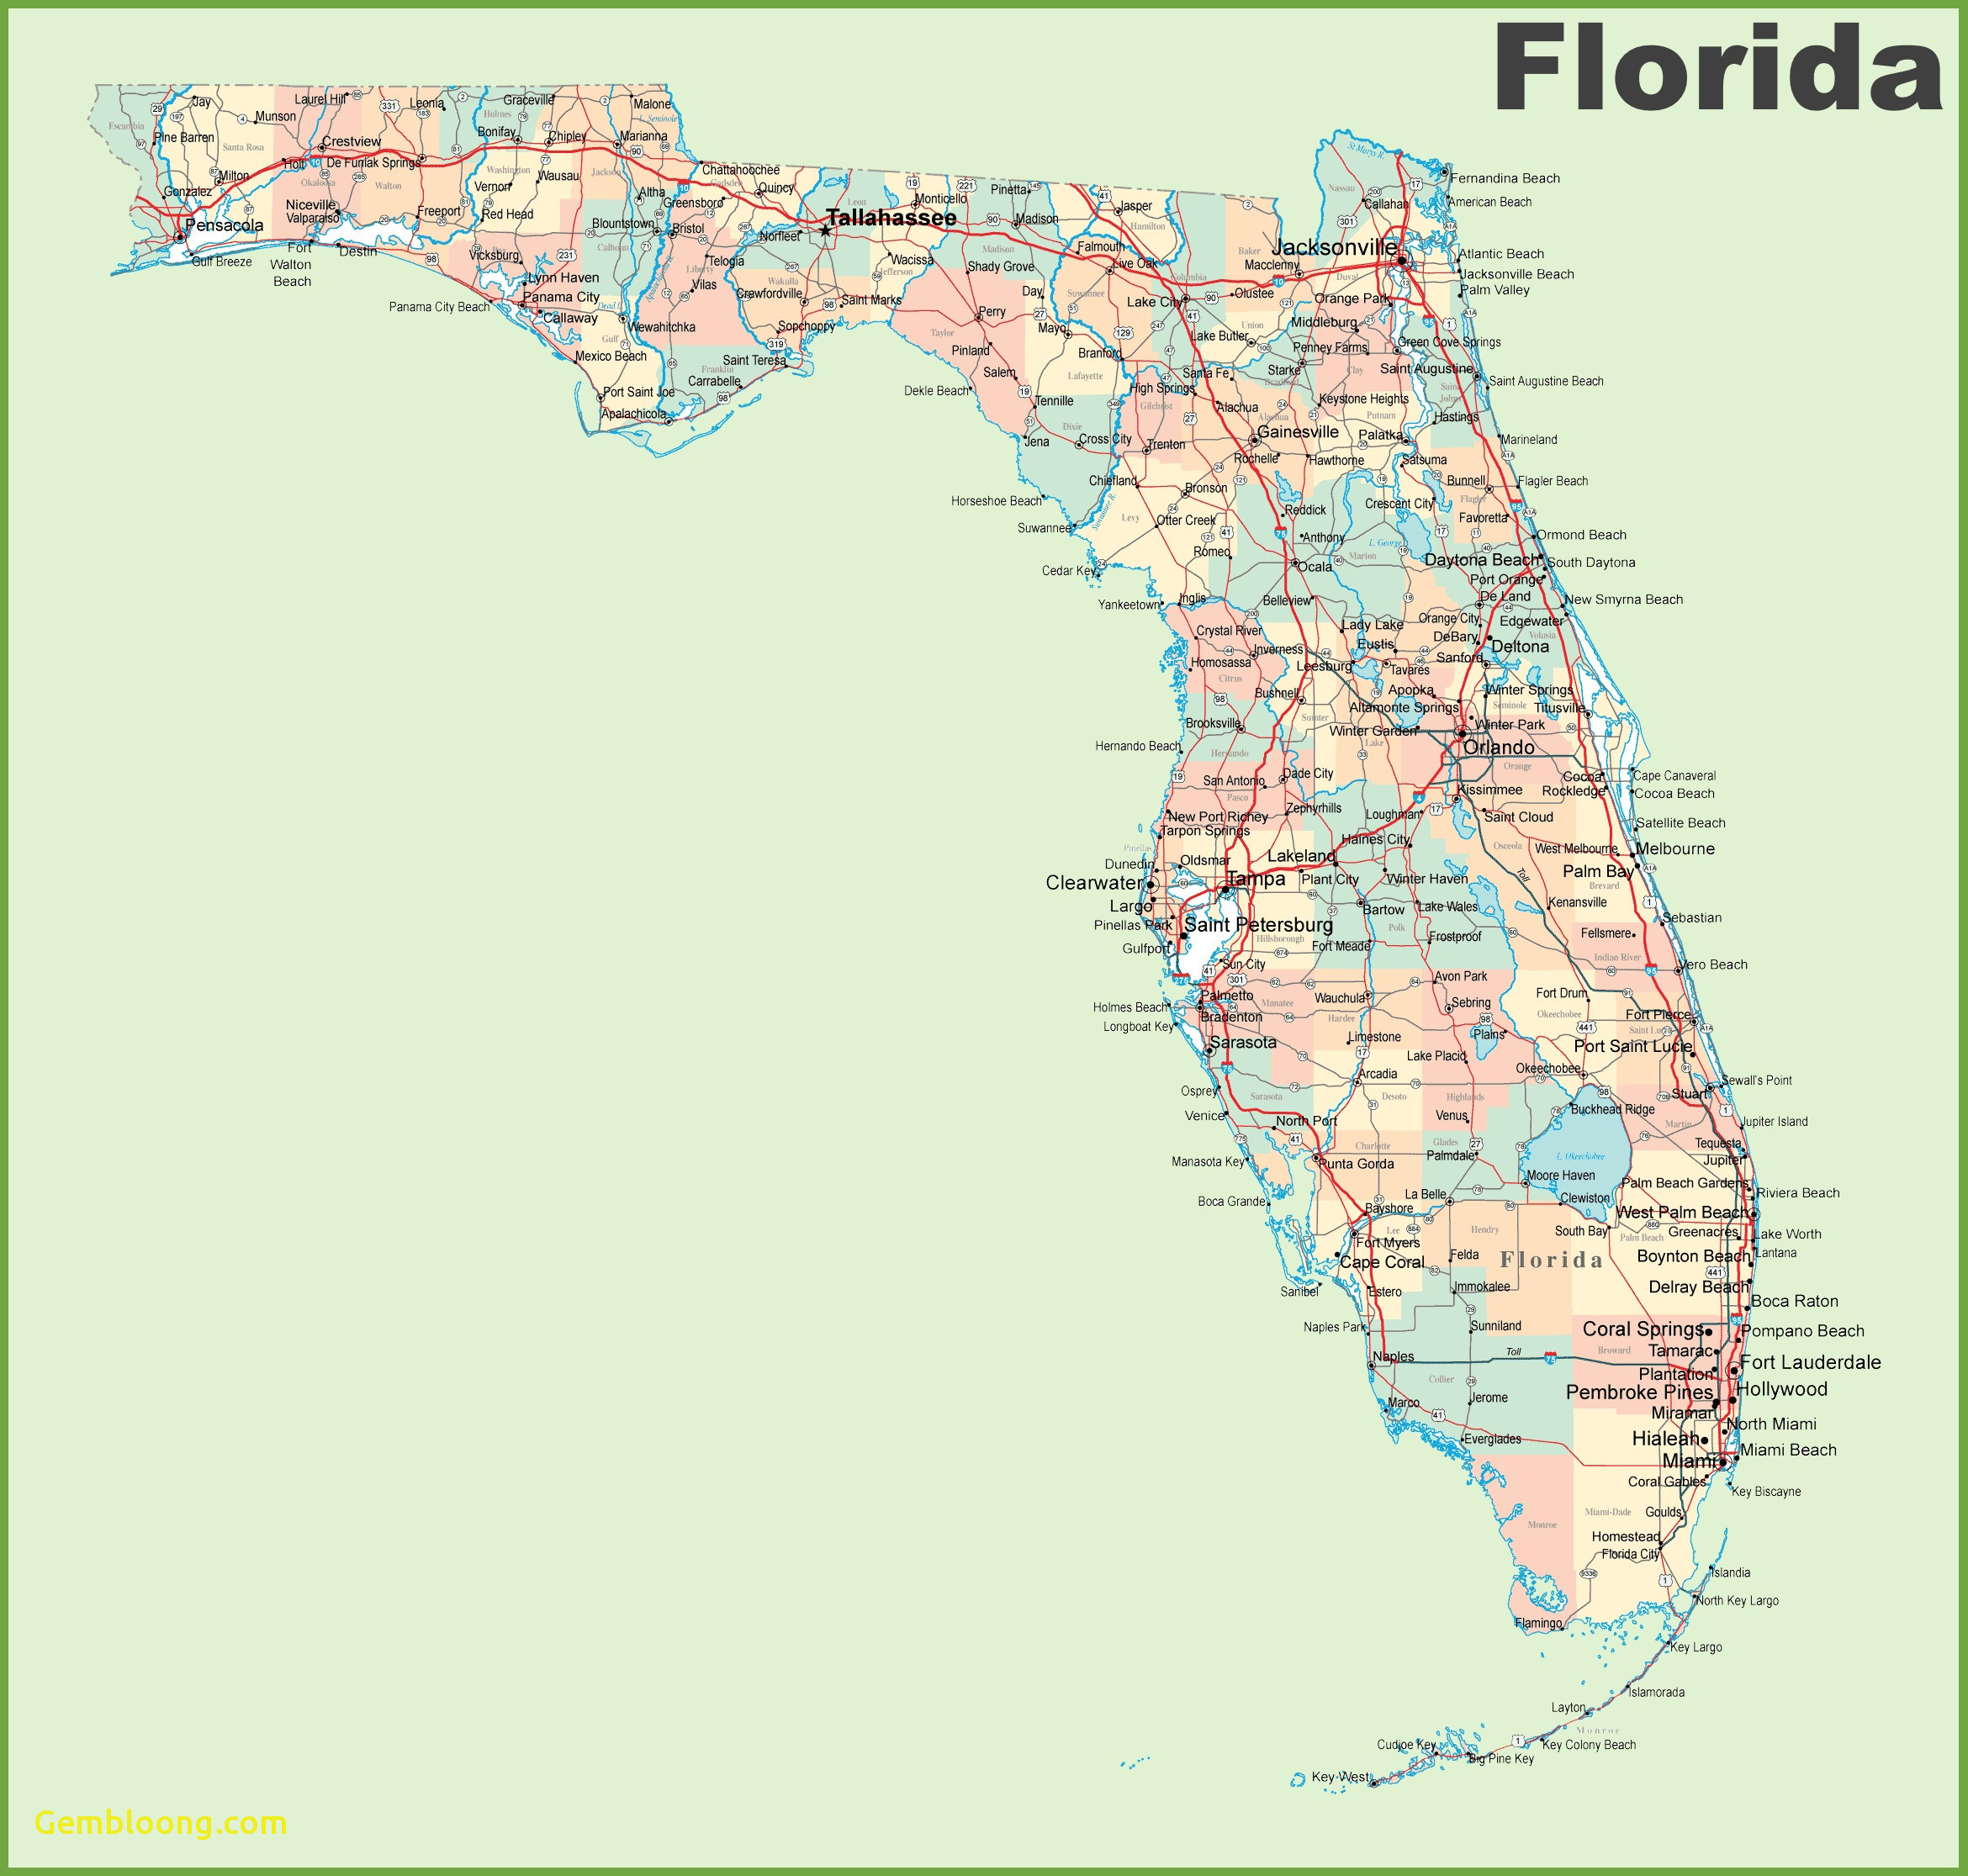 Cocoa Beach Florida Map From Etiforum 1 - Ameliabd - Cocoa Beach Florida Map